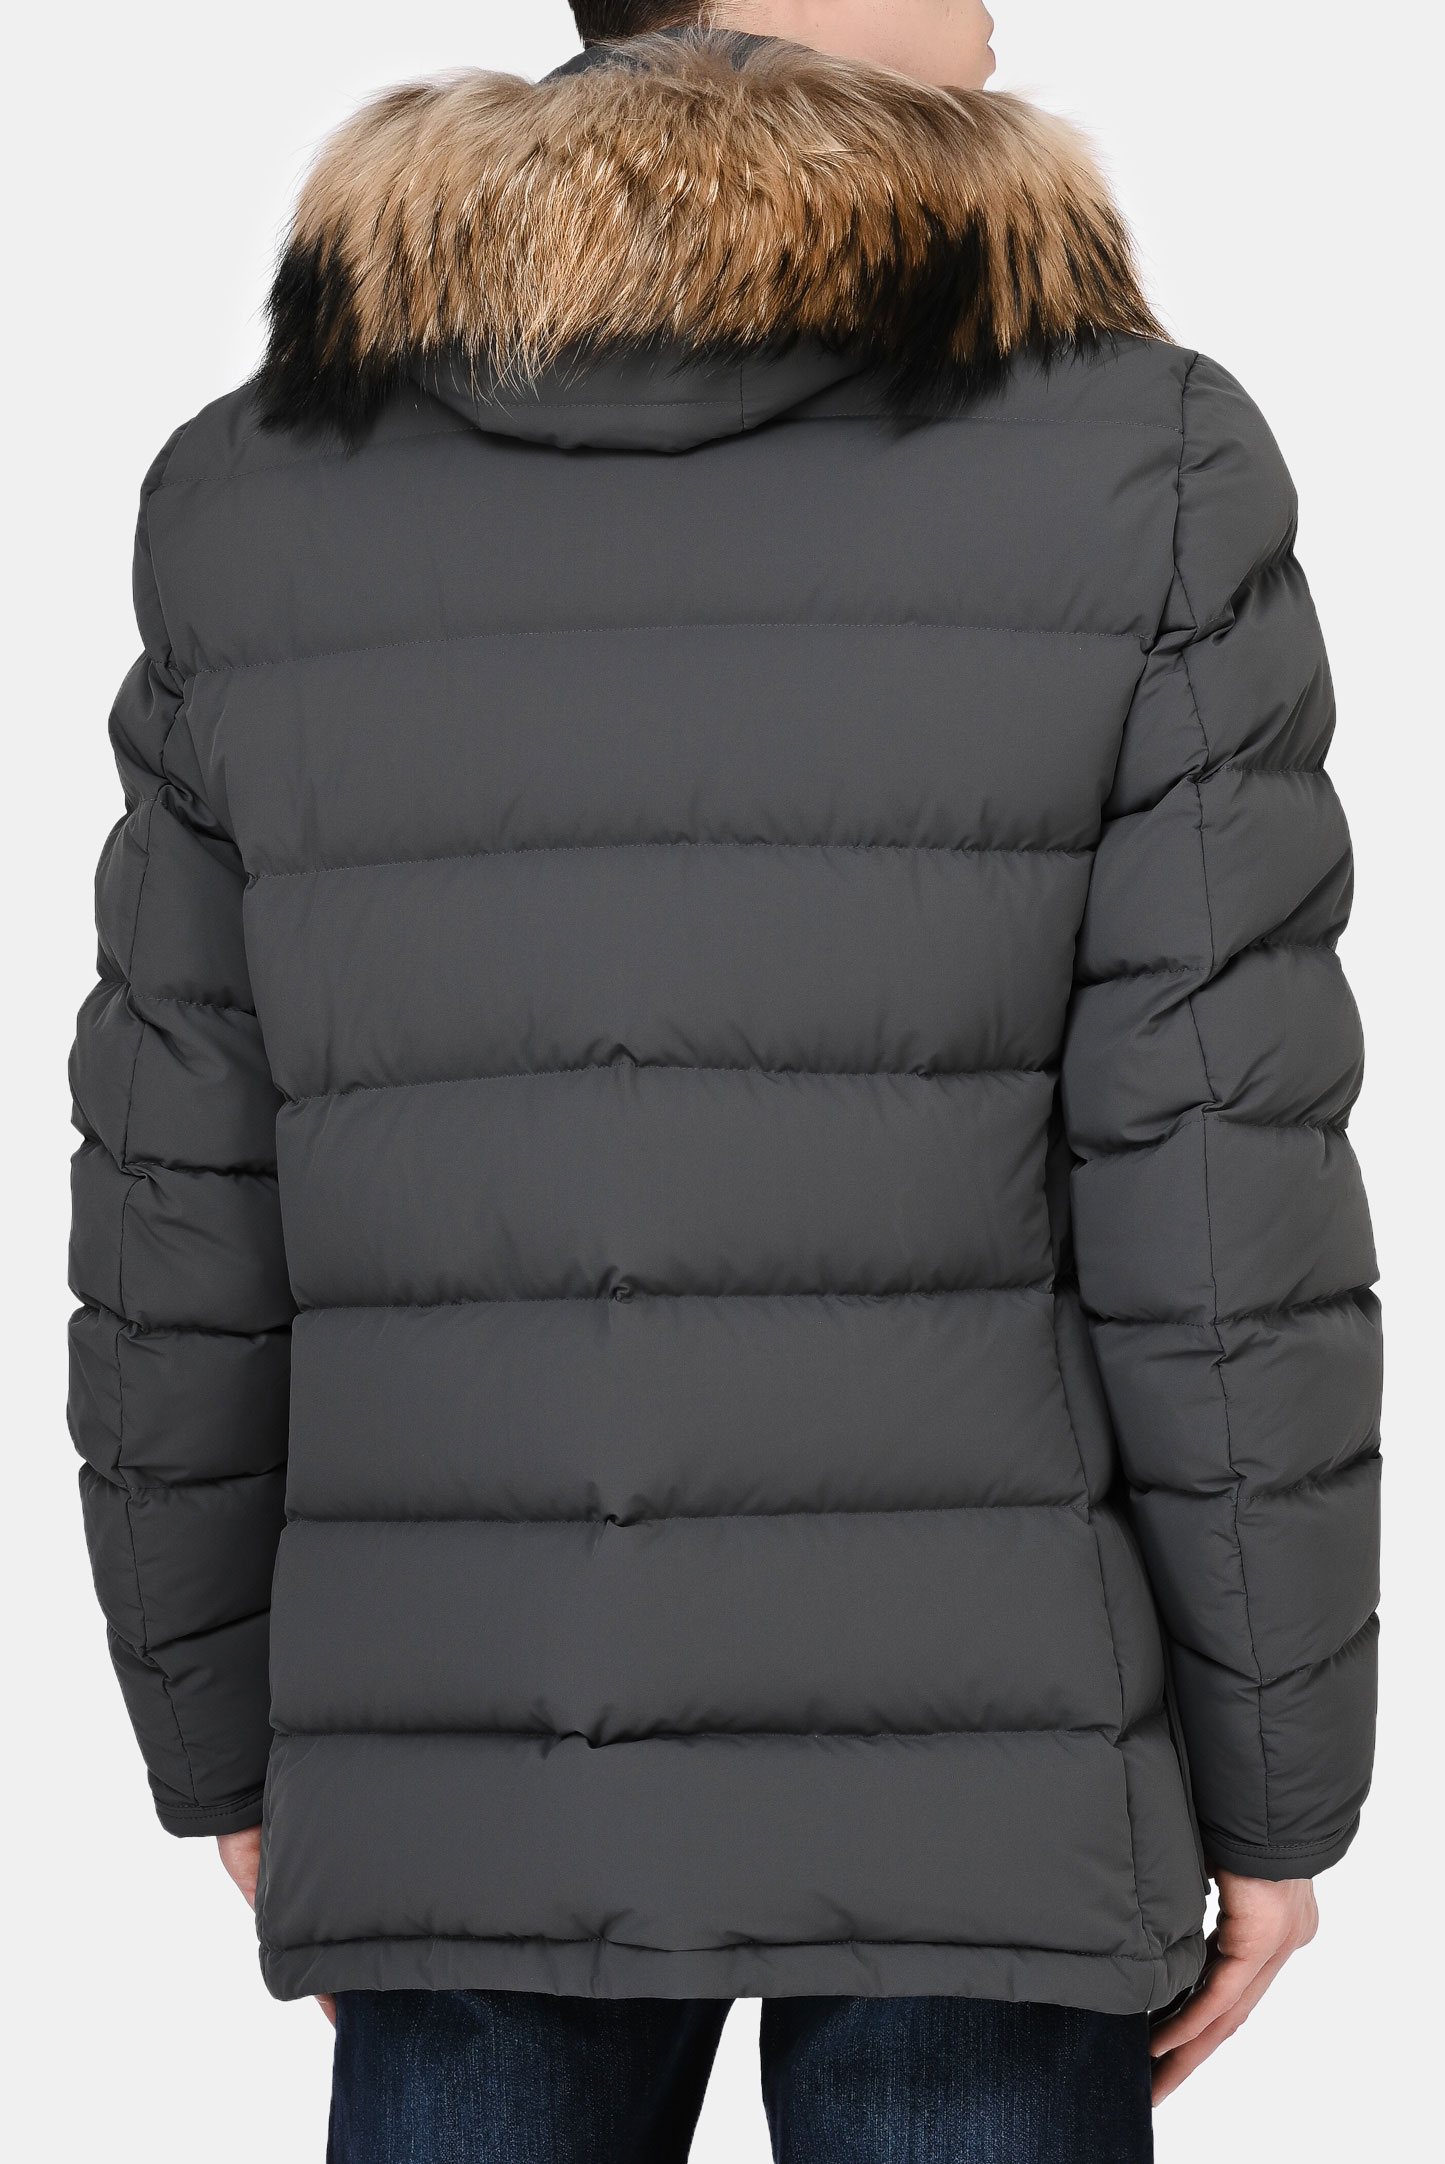 Куртка KITON UW1035V039, цвет: Серый, Мужской